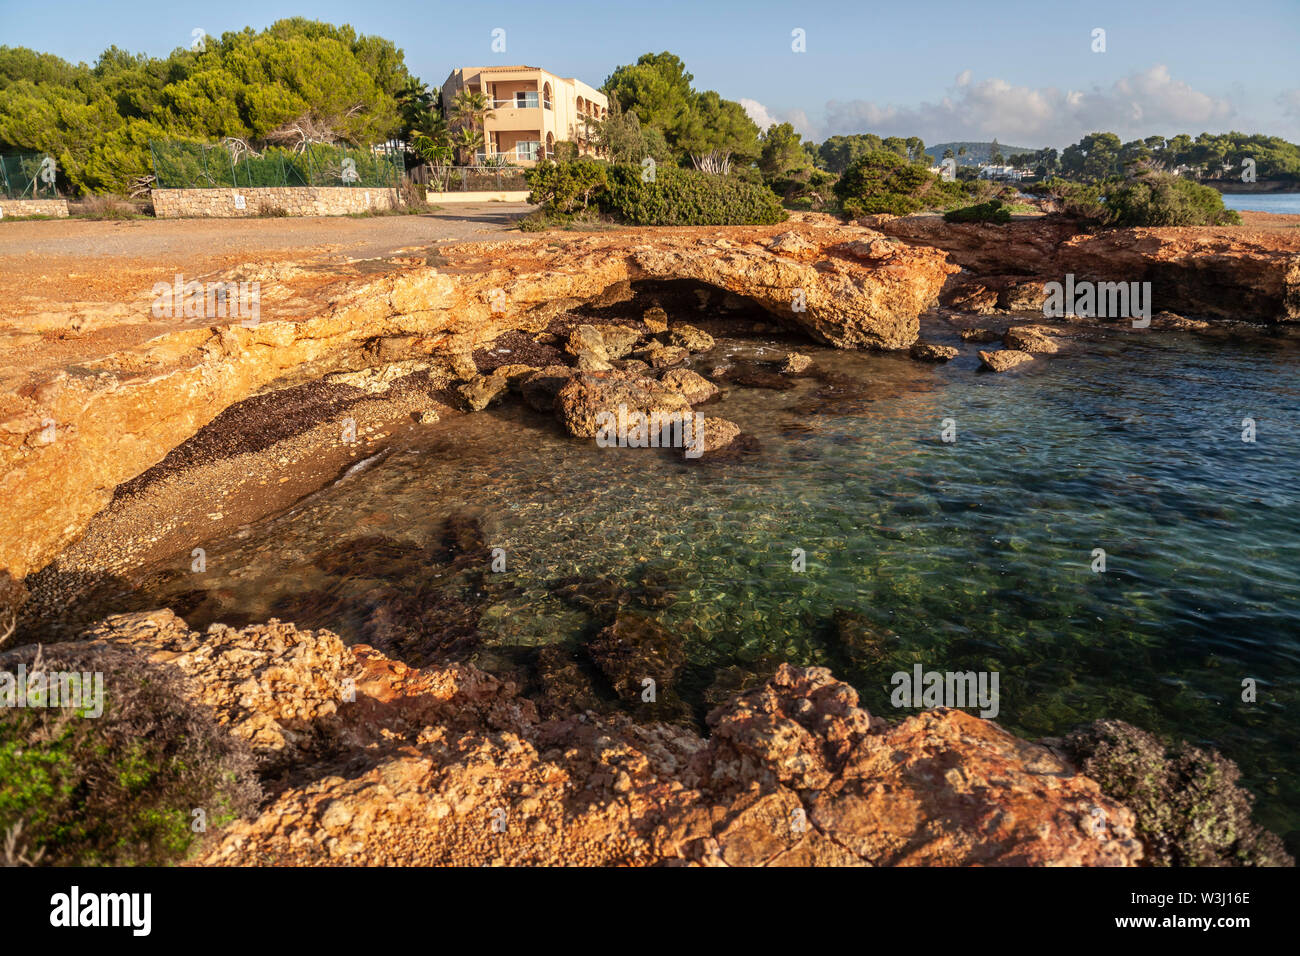 Santa Eularia des Riu, Littoral, Küsten, markanten Felsen Ocker Farbe. Mittelmeer, Insel Ibiza, Balearen, Spanien. Stockfoto